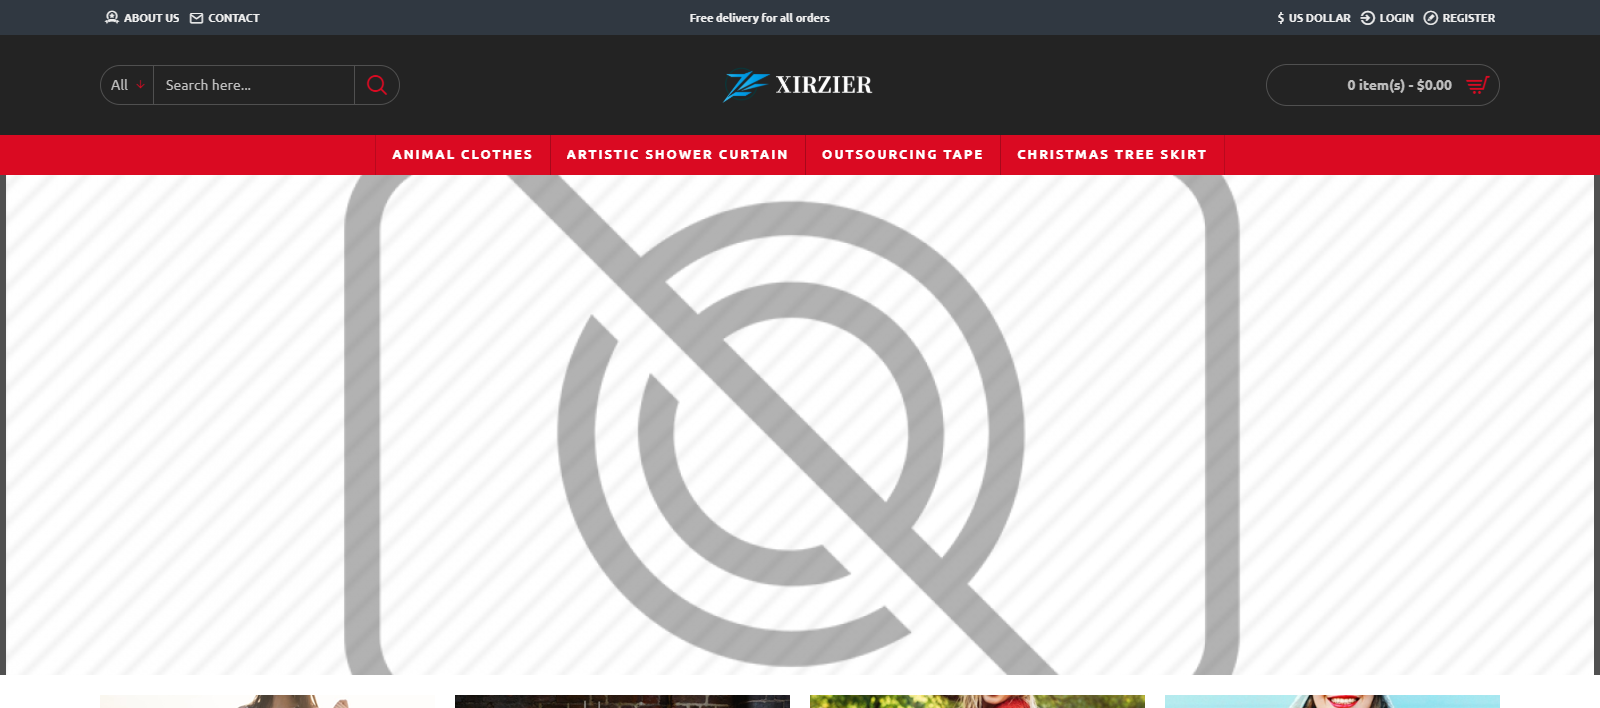 Xirzier Homepage Image